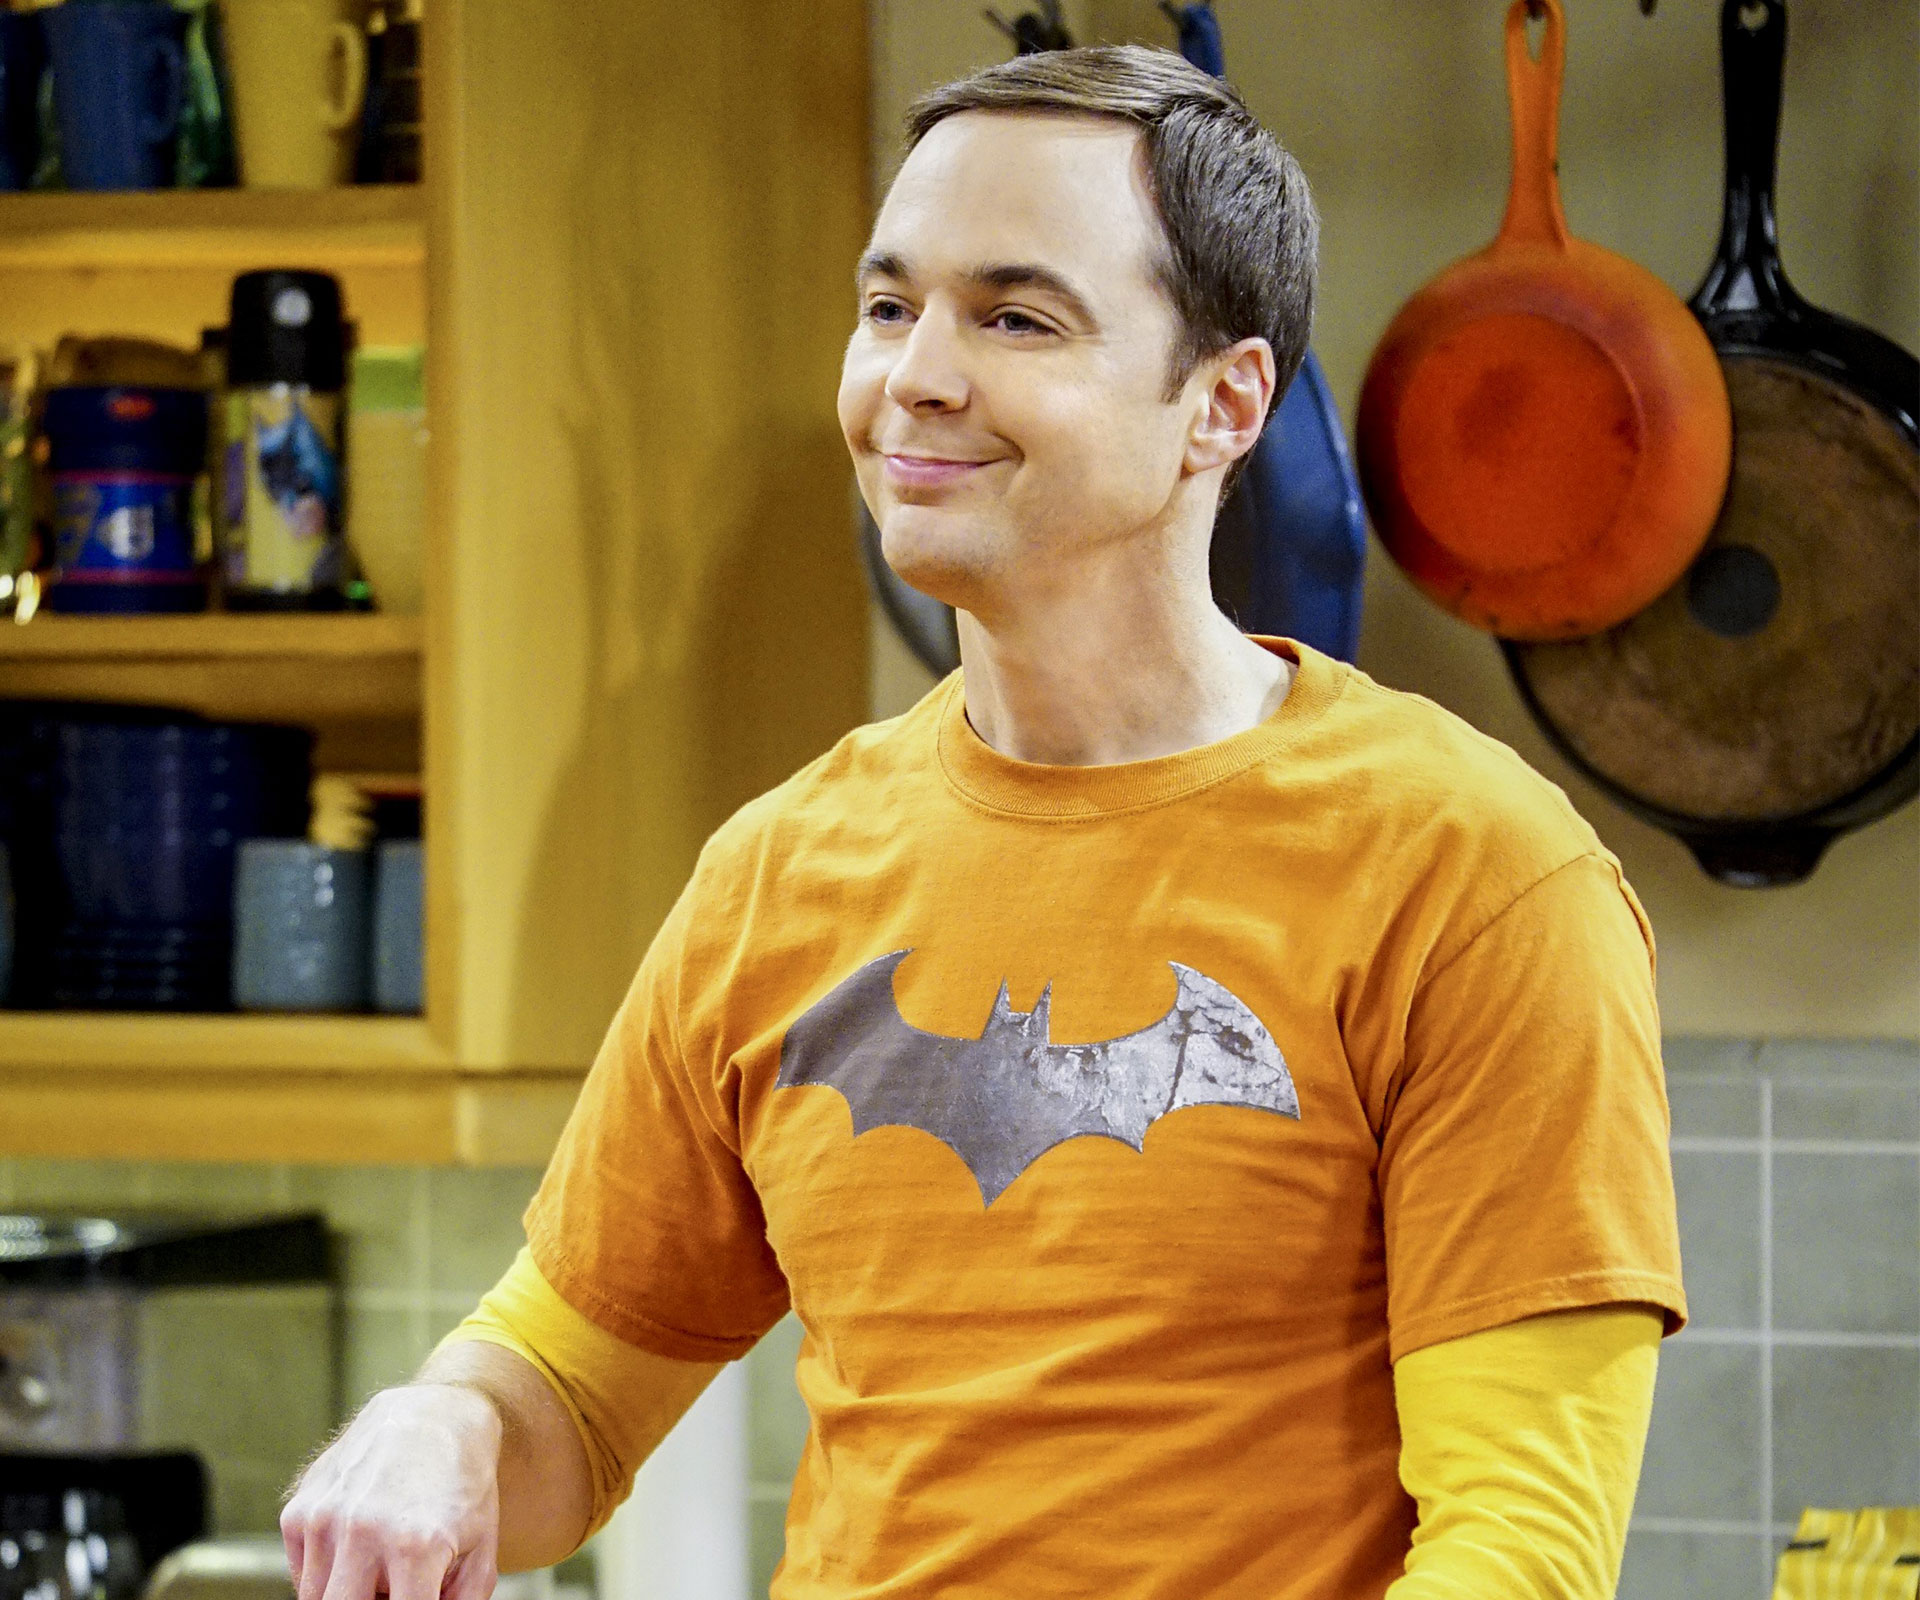 Sheldon Big Bang Theory